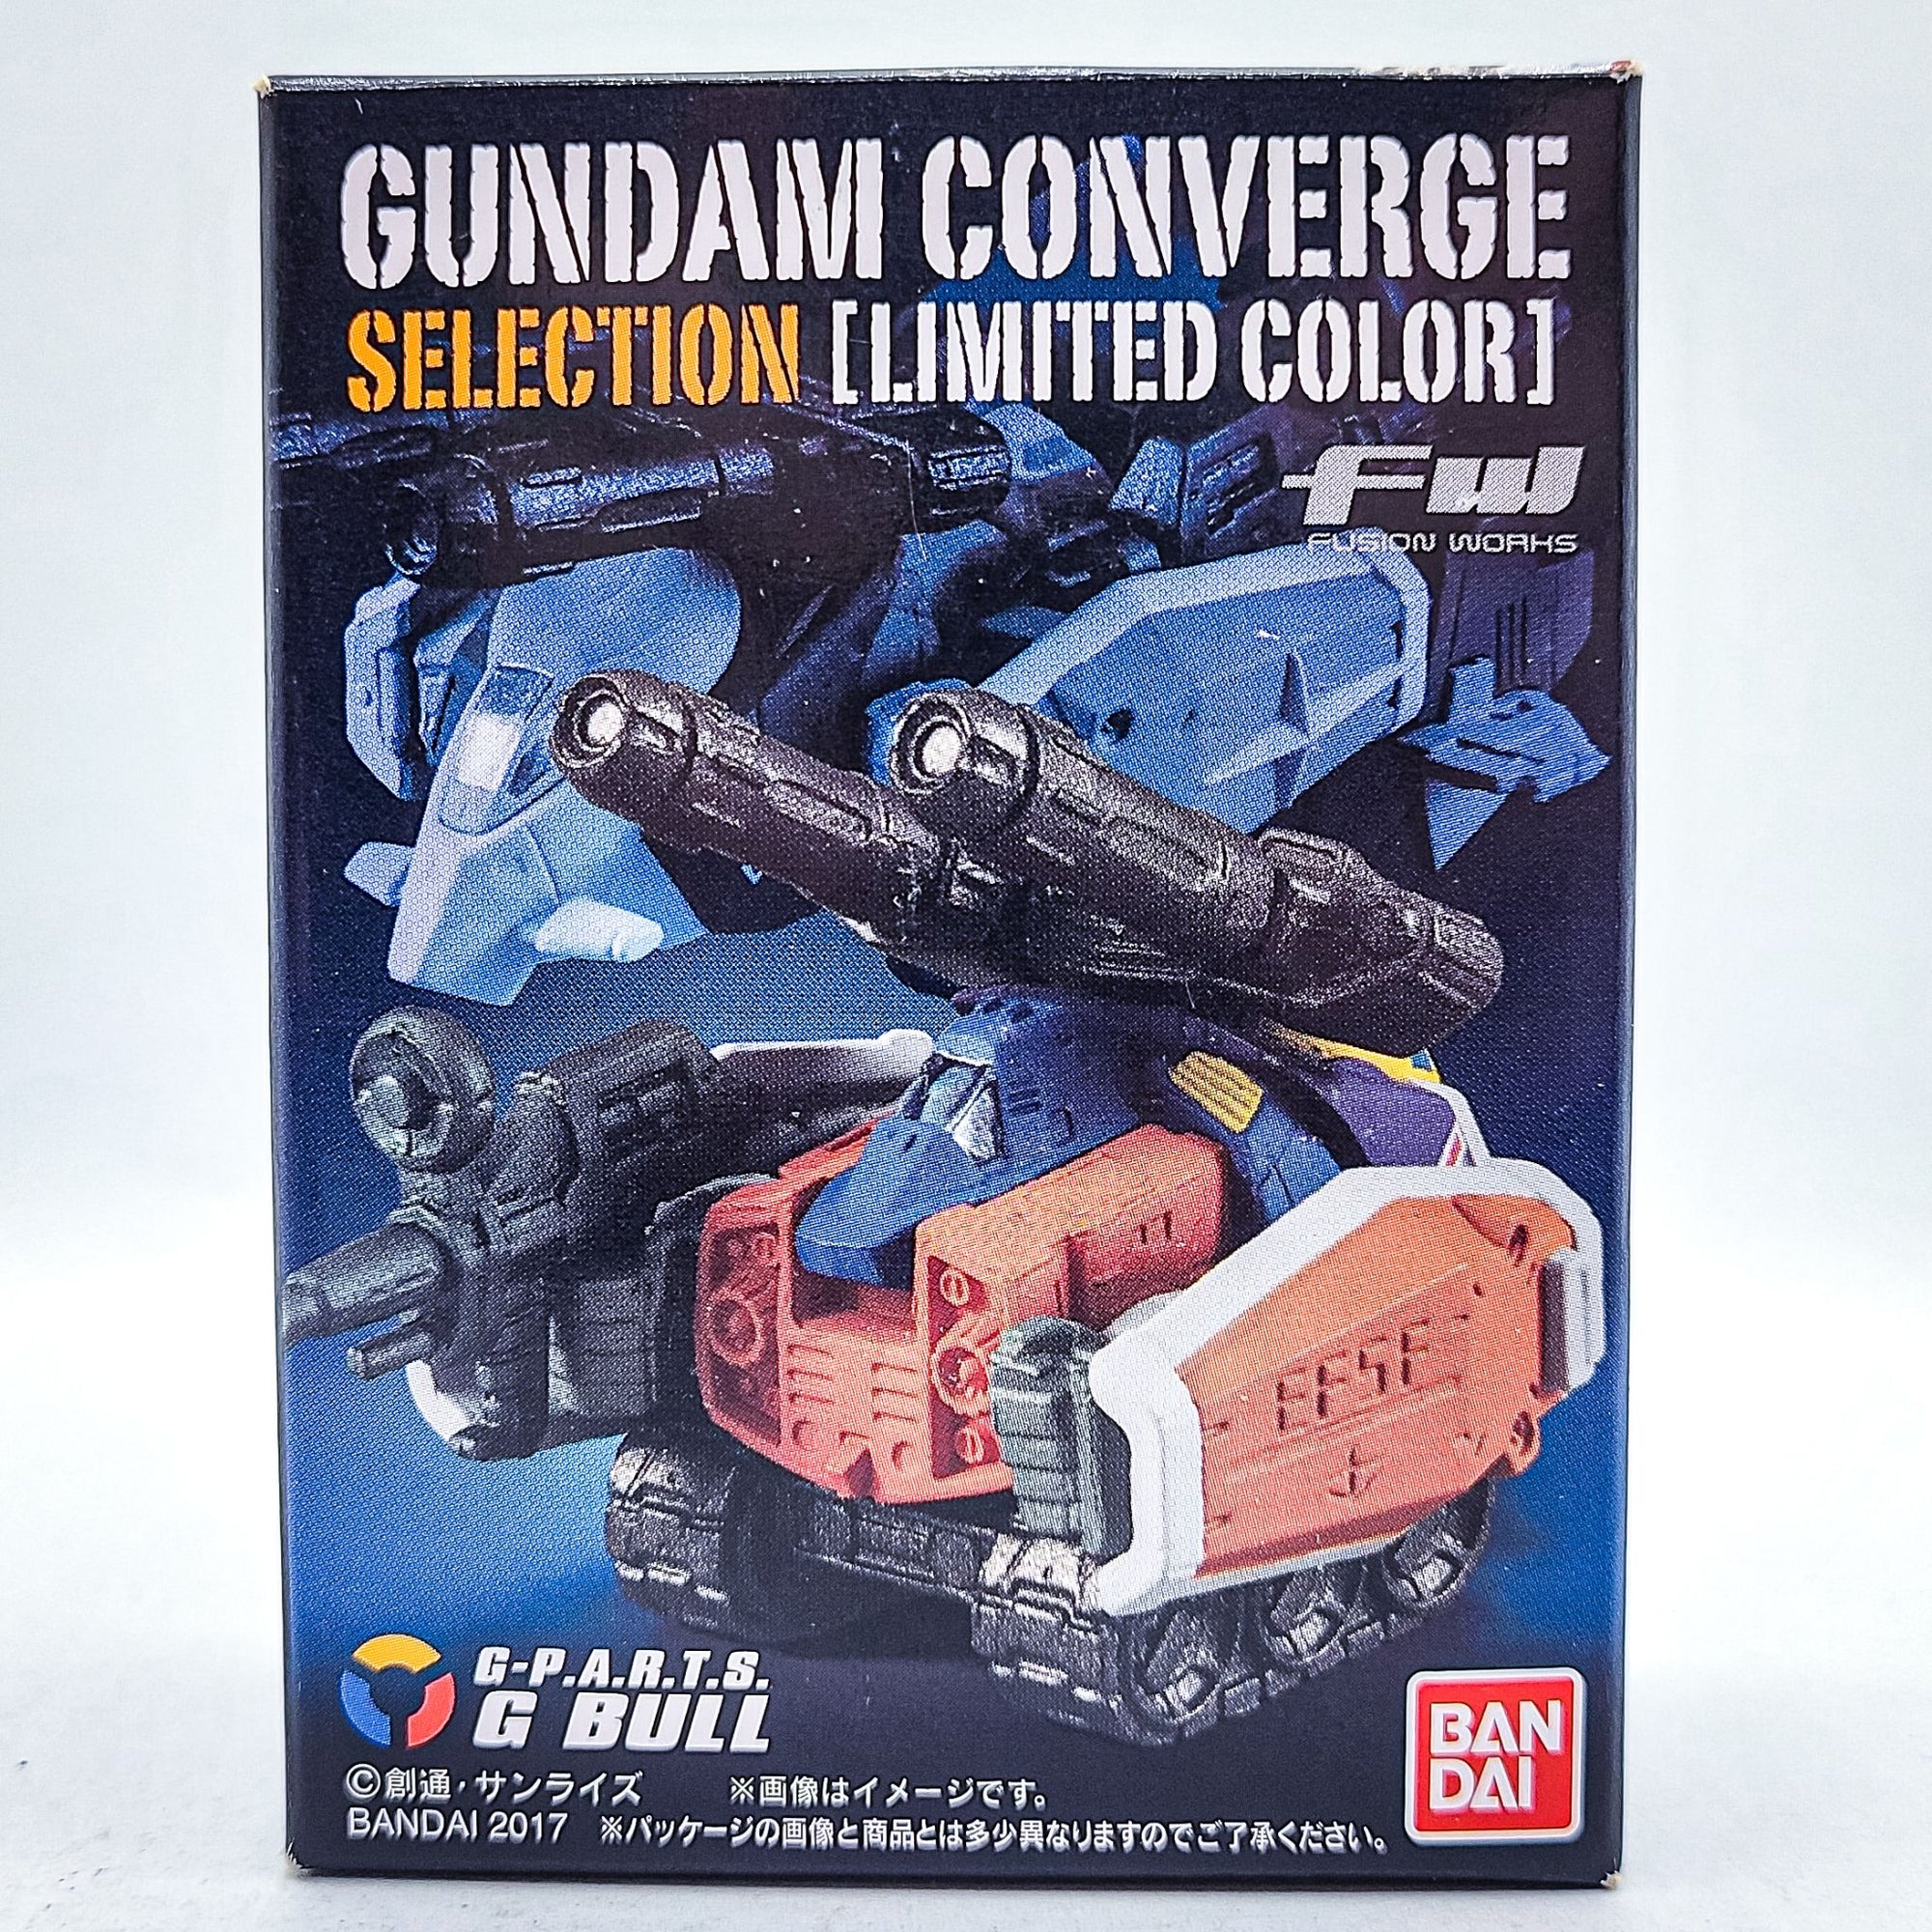 Gundam Converge G-BULL Limited Color Version by Bandai - 1